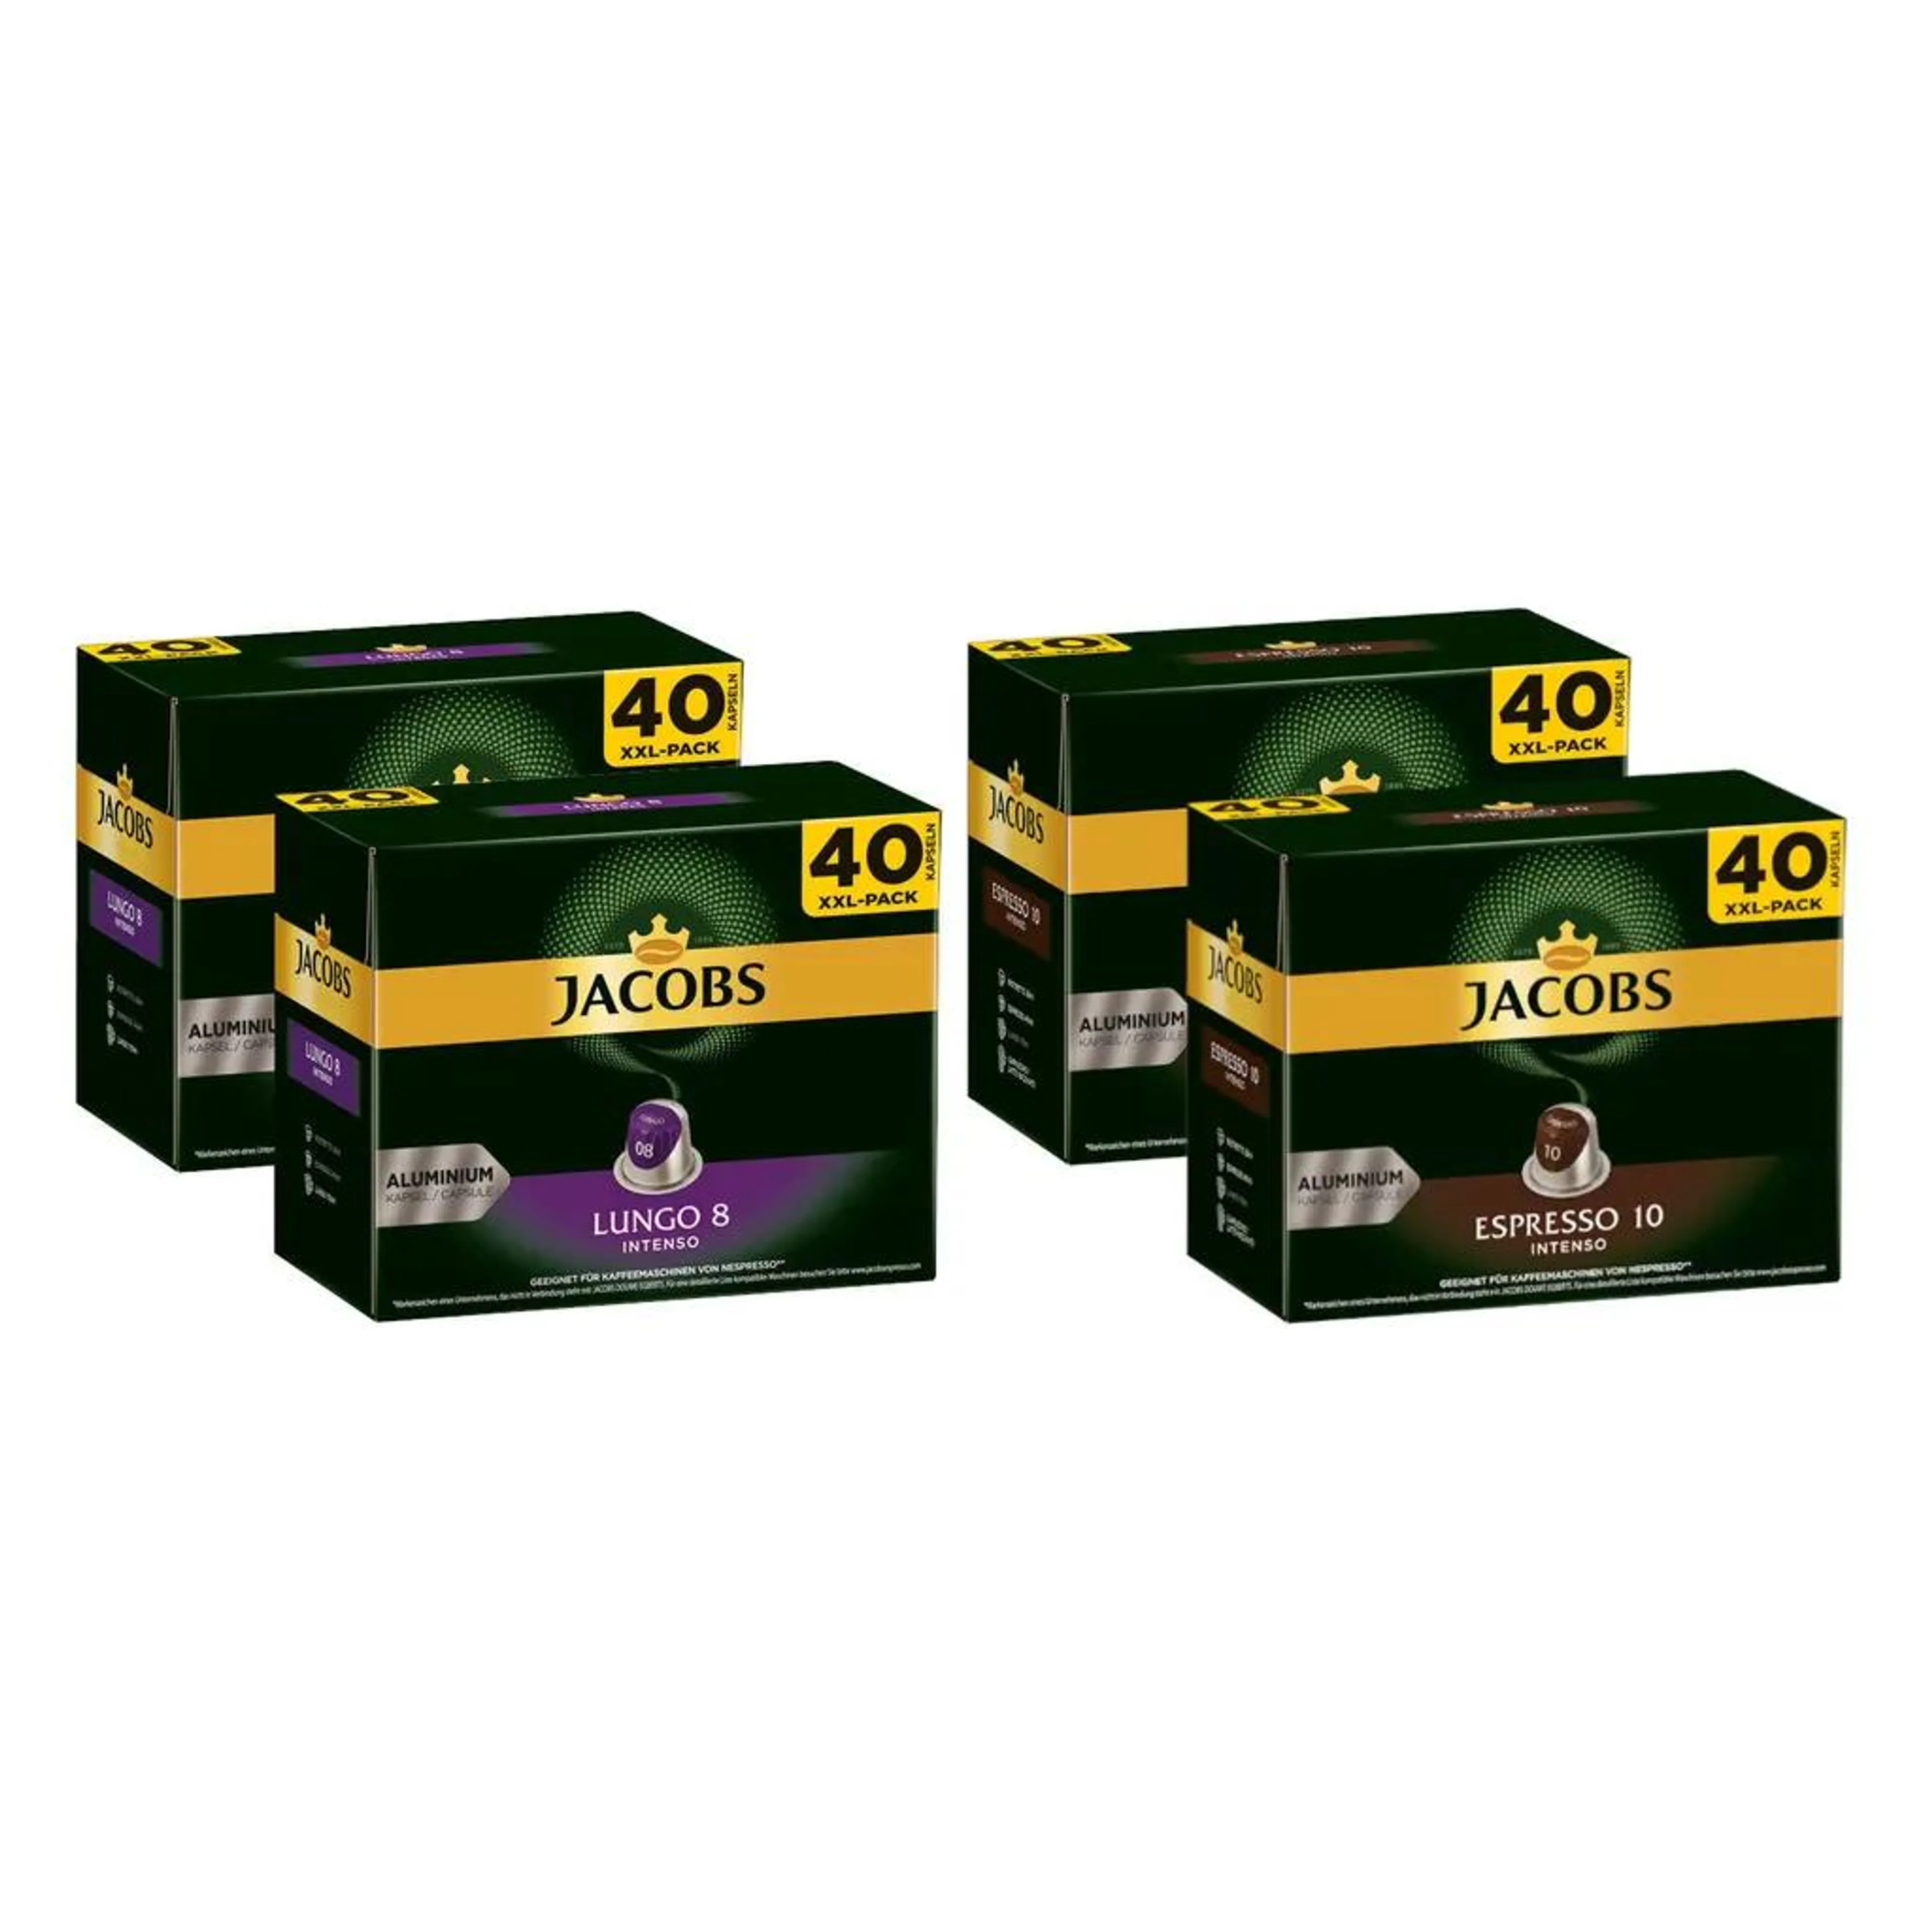 JACOBS Kapseln Nespresso®* kompatibel 2 x 40 Lungo 8 Intenso + 2 x 40 Espresso 10 Intenso XXL-Pack - insgesamt 160 Getränke